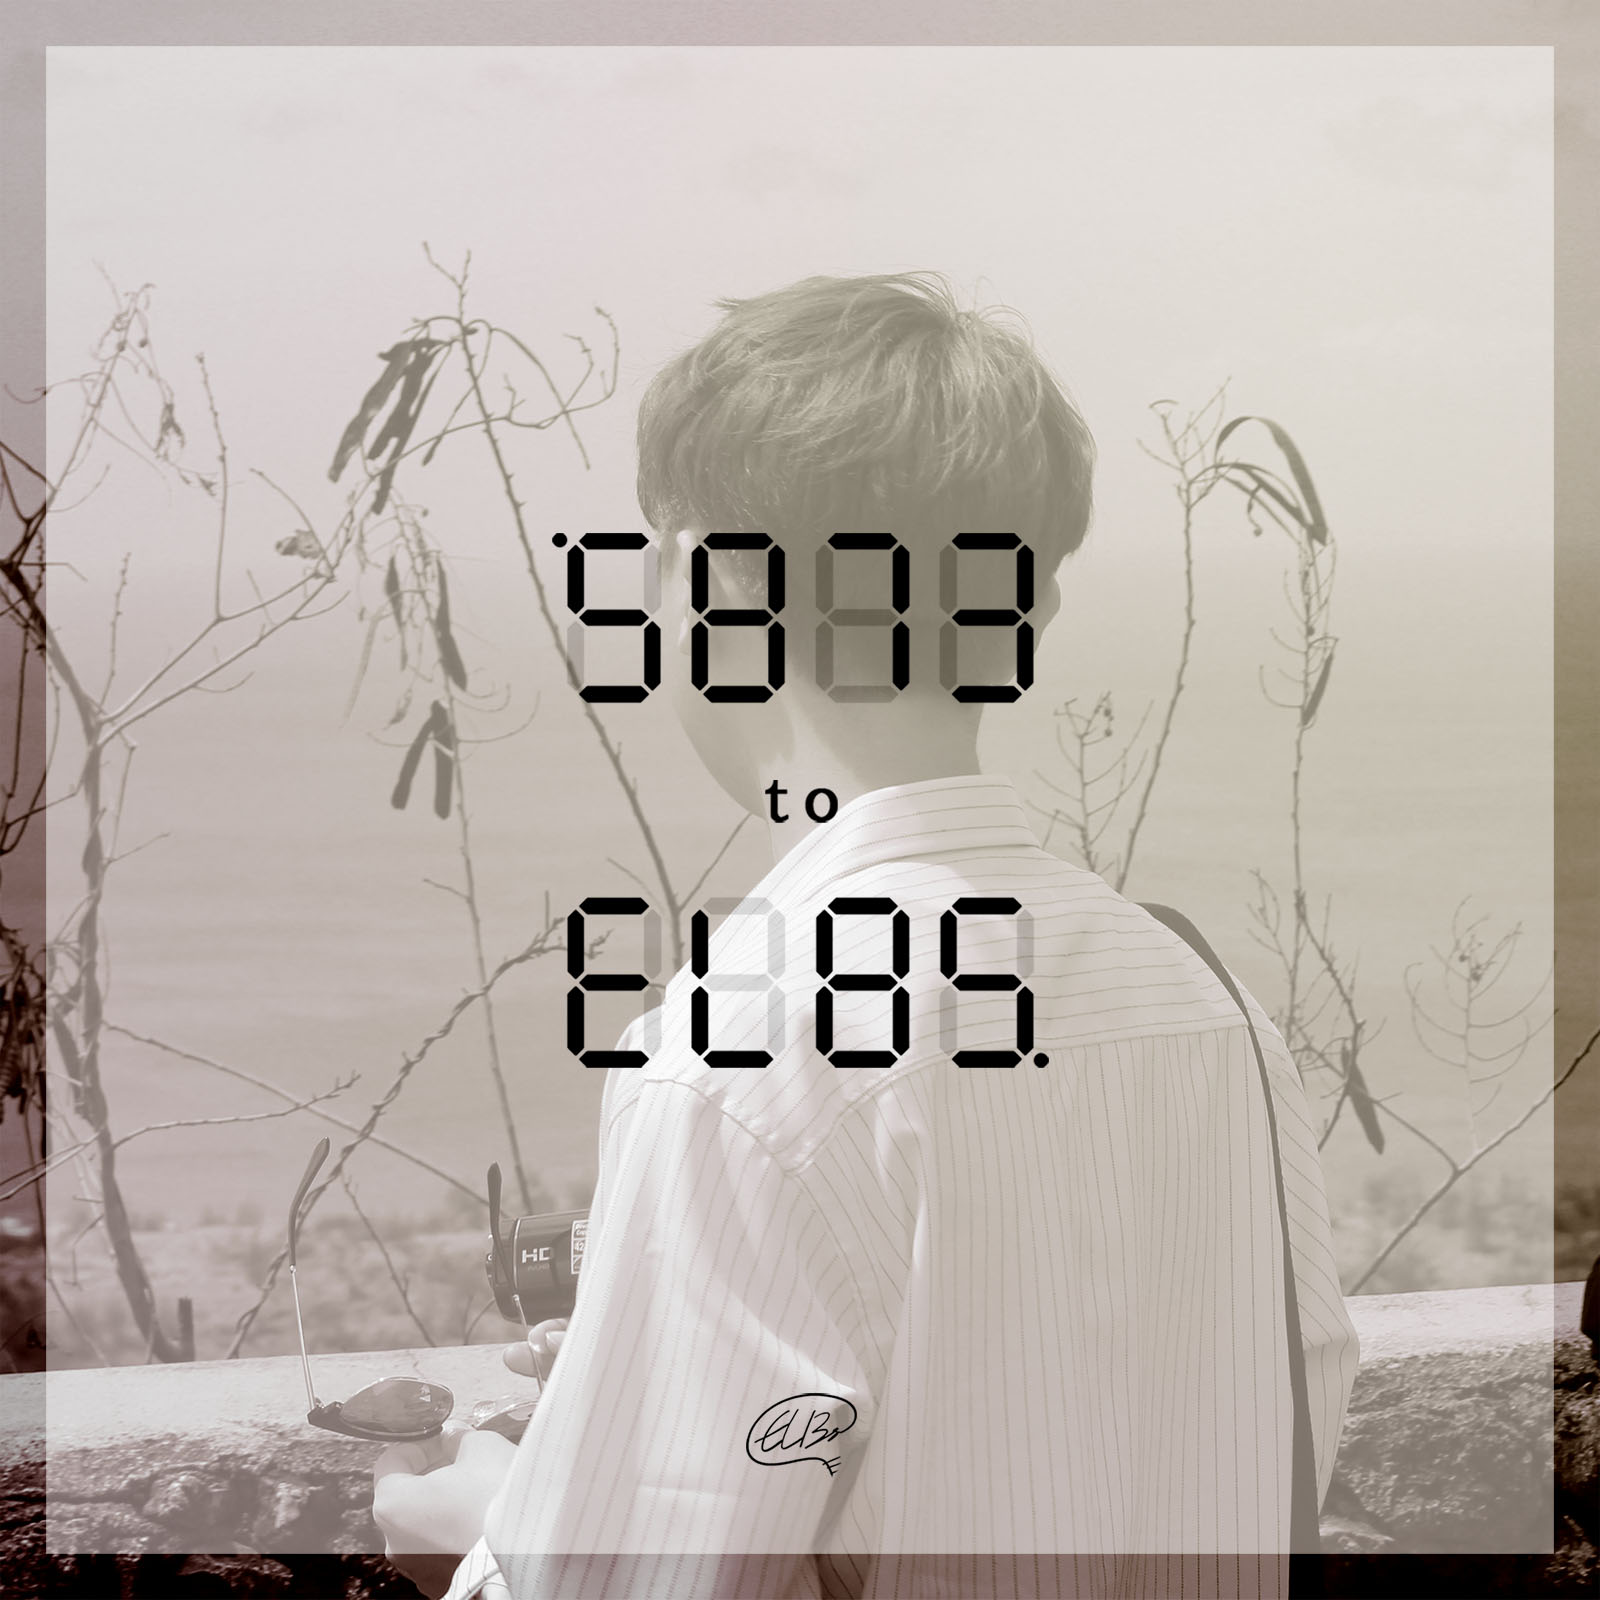 [5873 to ELBs] vol.1_beginning